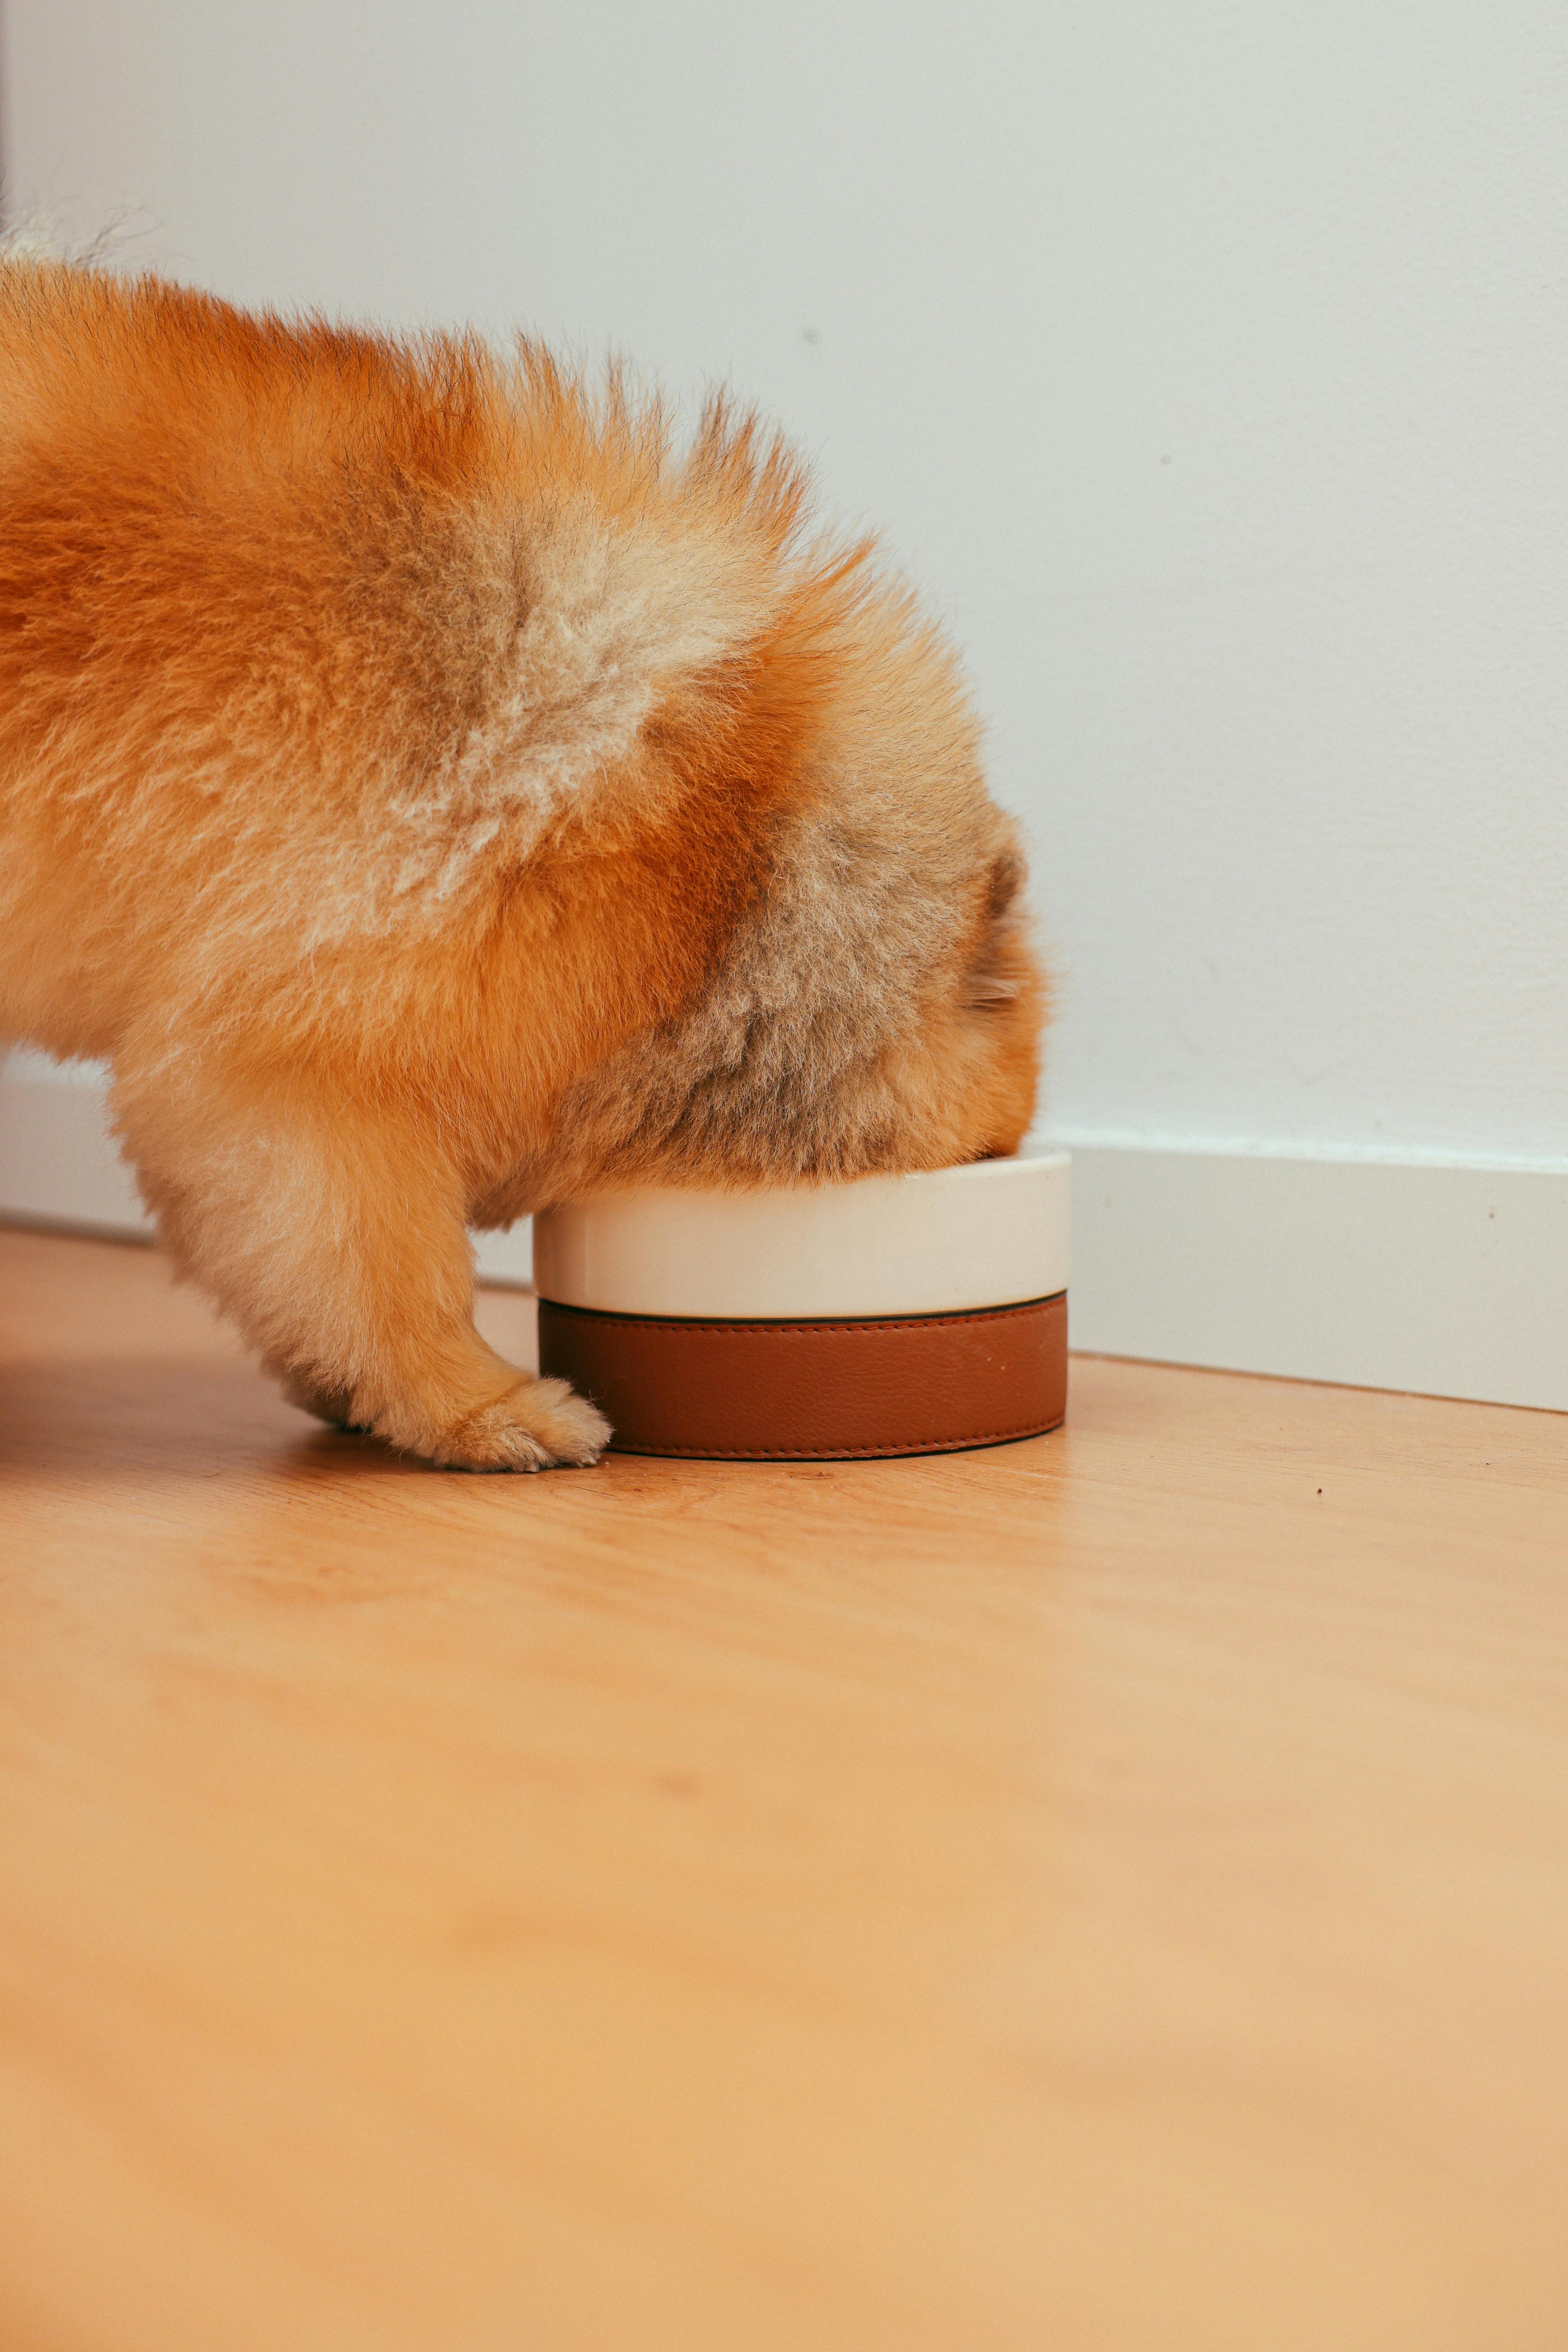 Pomeranian eating, head in bowl